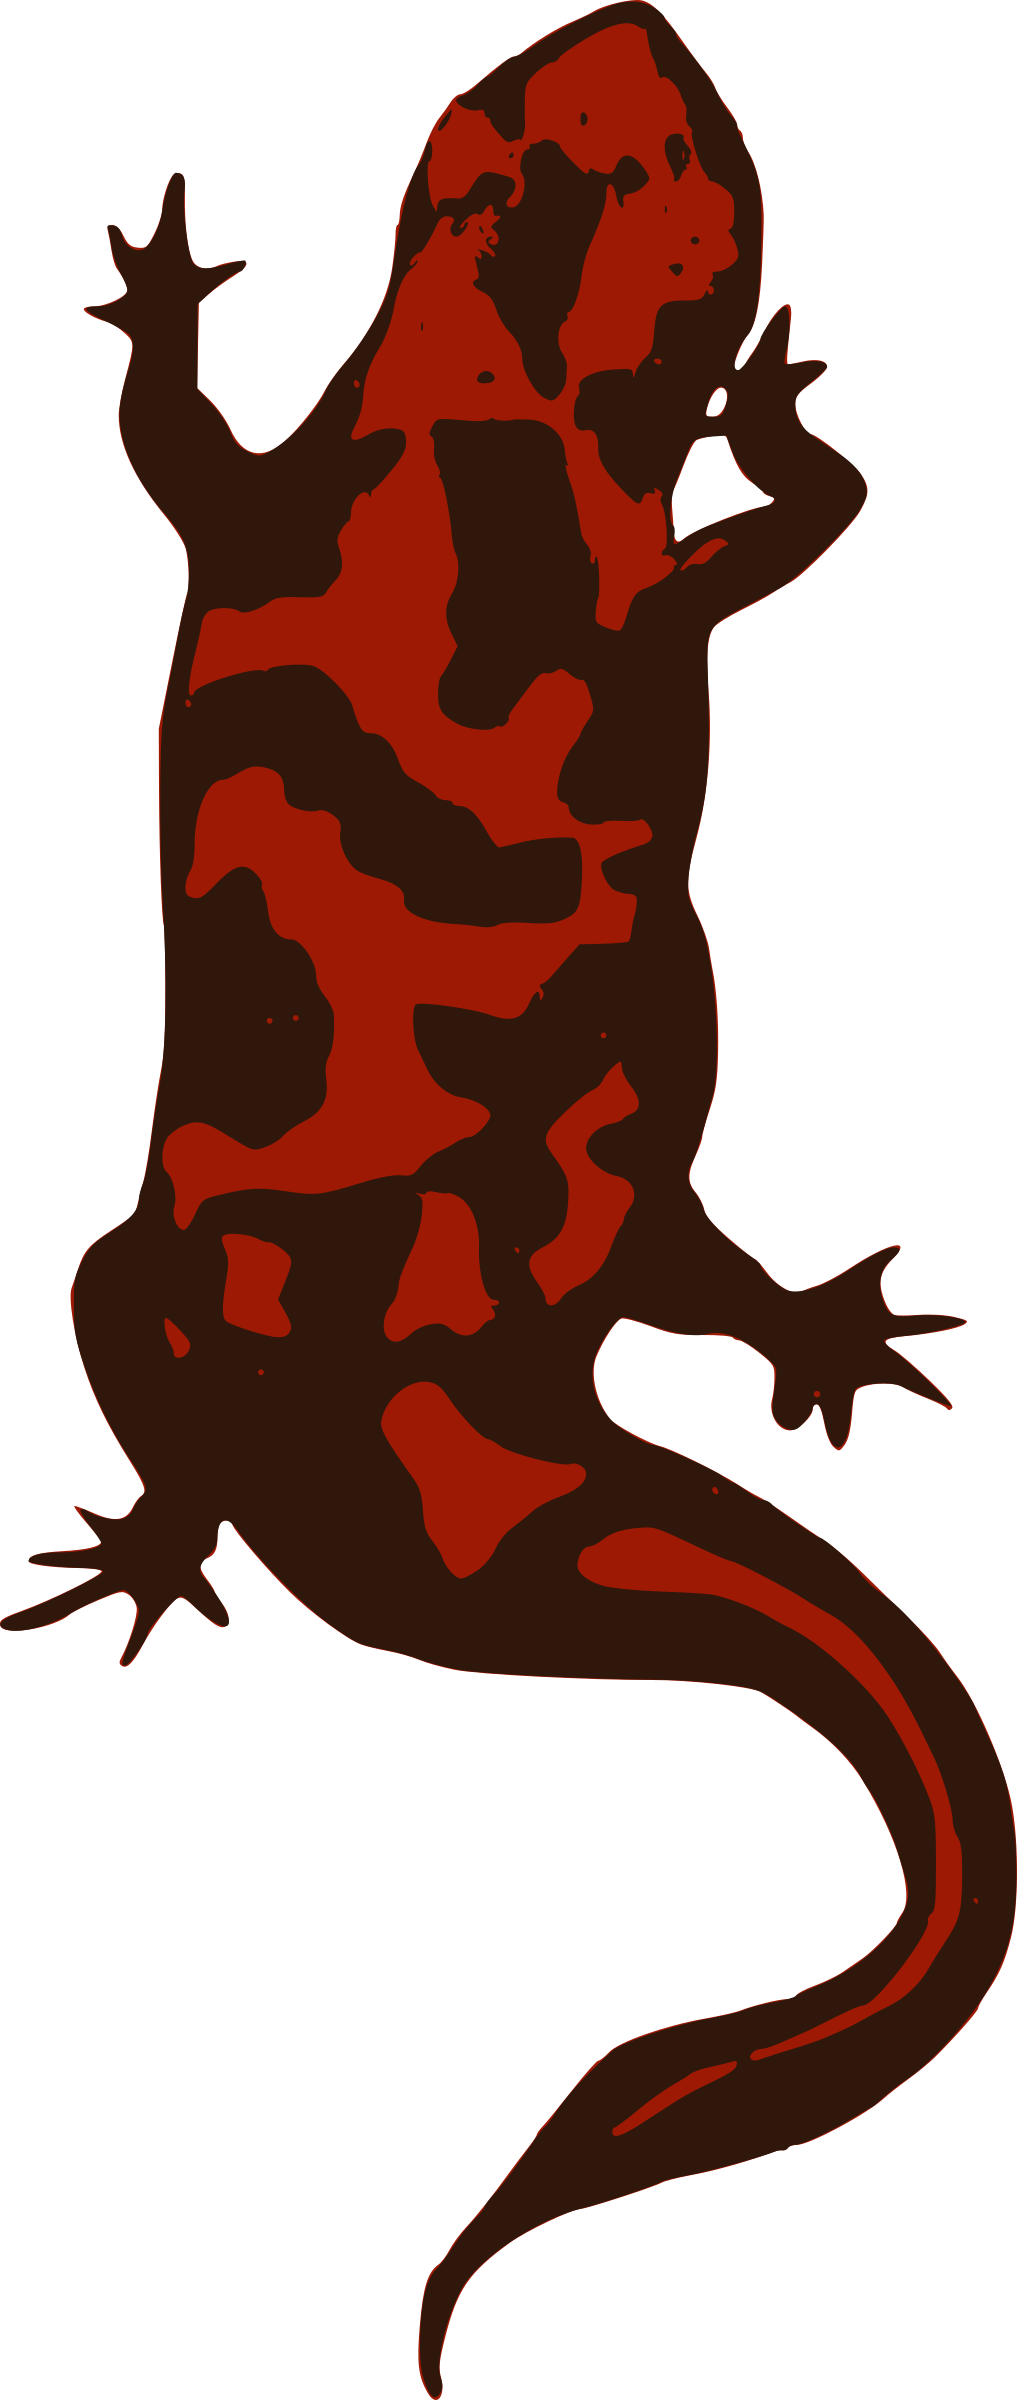 Lizard red lizard